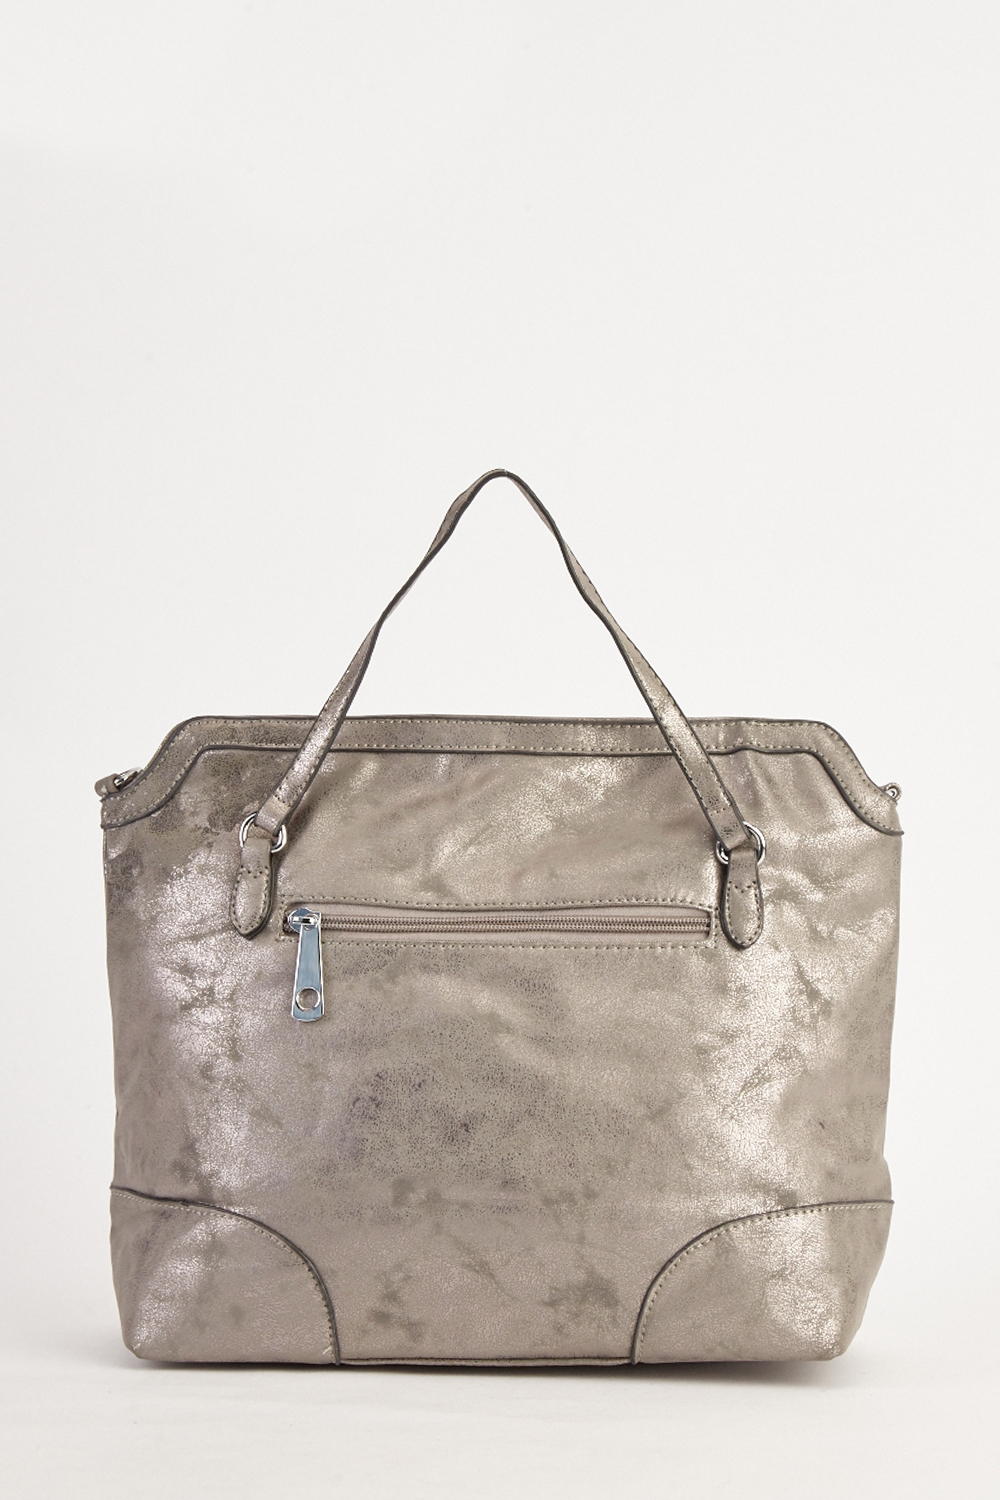 Metallic Textured Handbag - Just $7